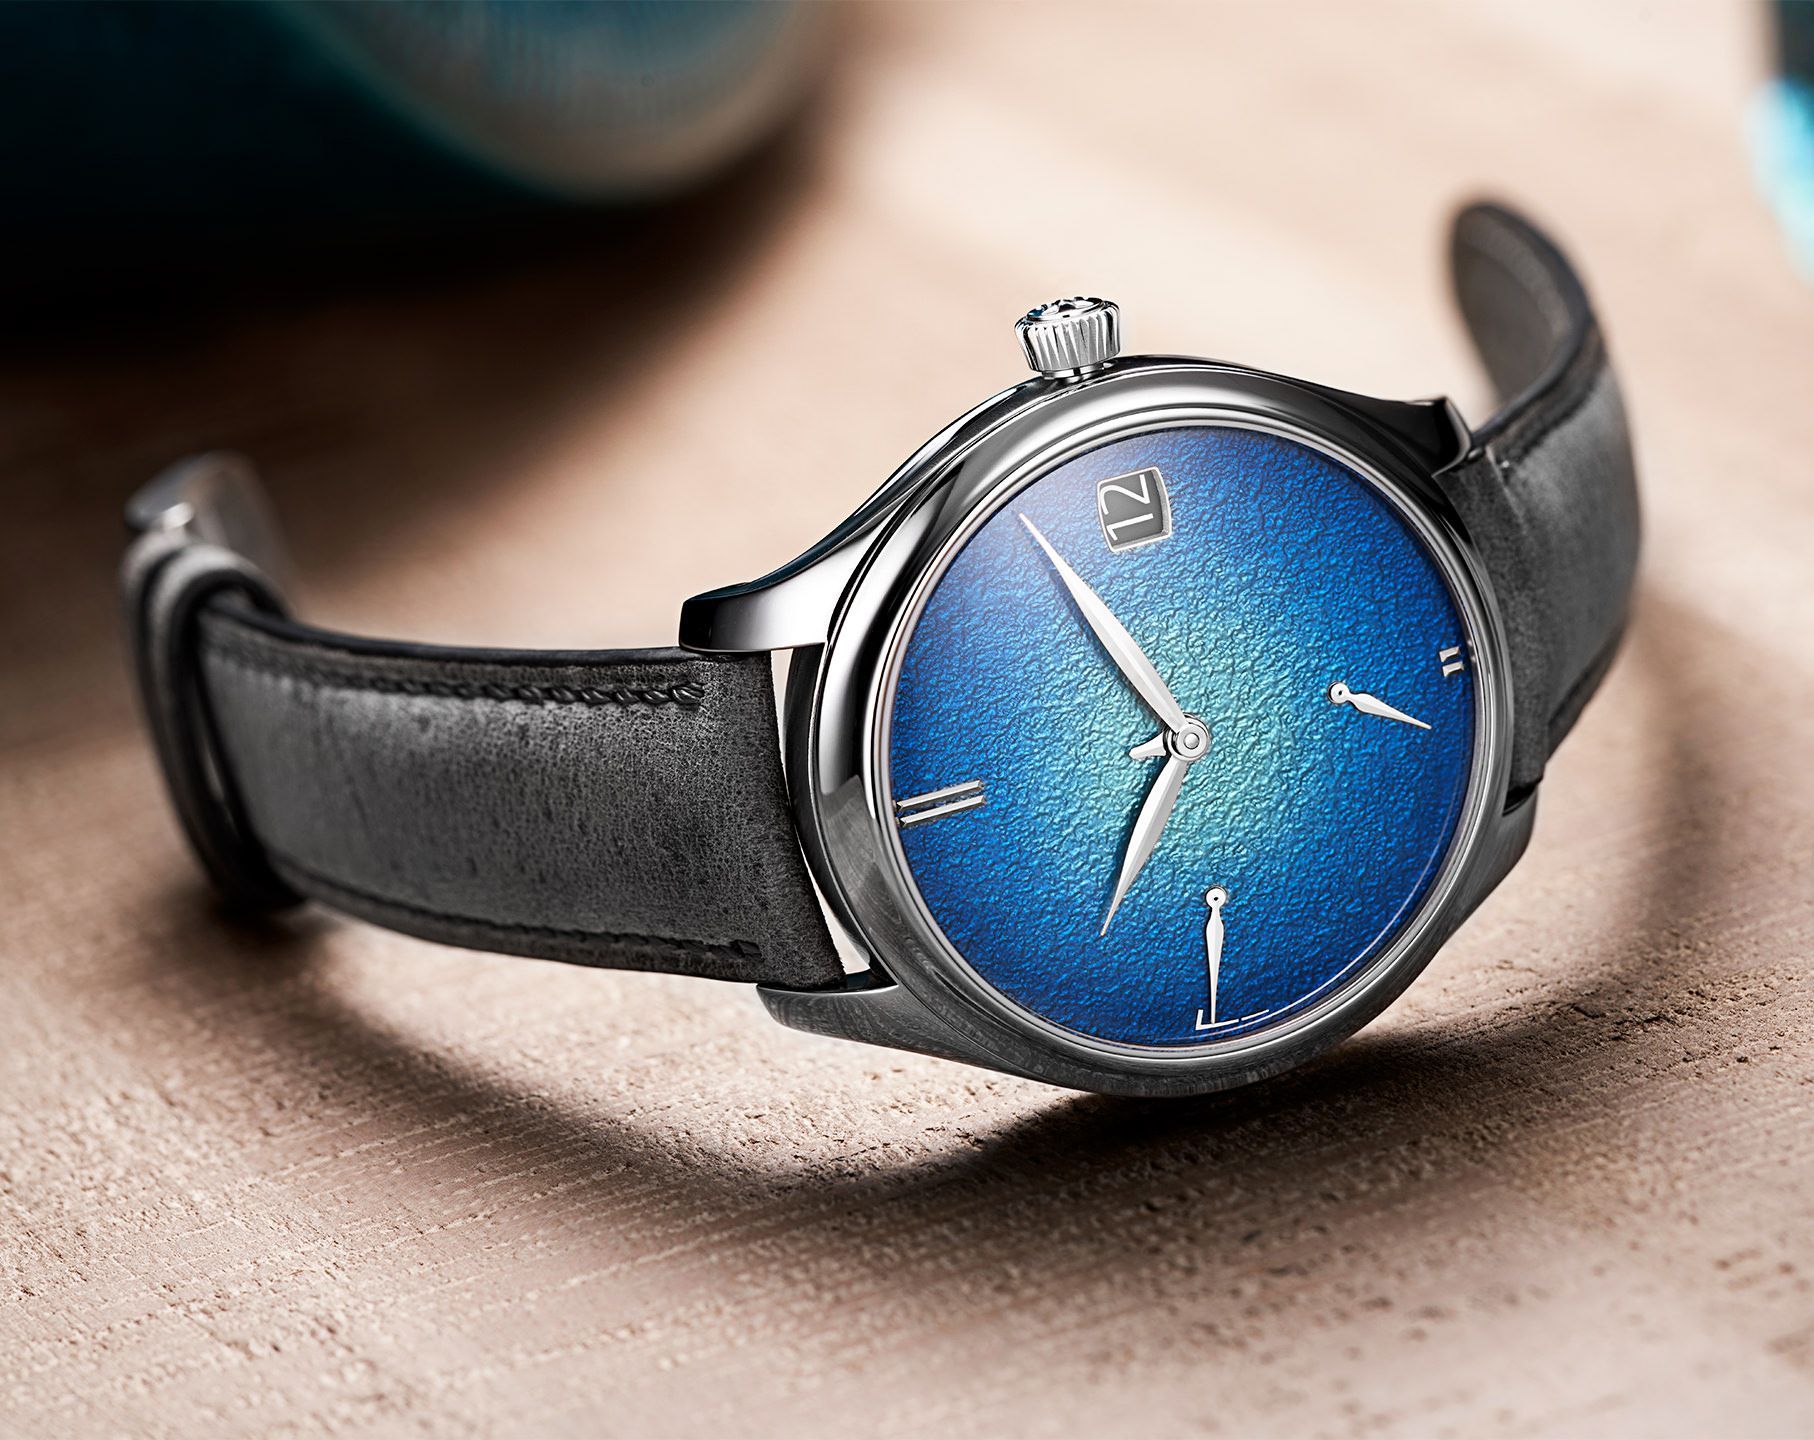 H. Moser & Cie. Perpetual Calendar 42 mm Watch in Blue Dial For Men - 4